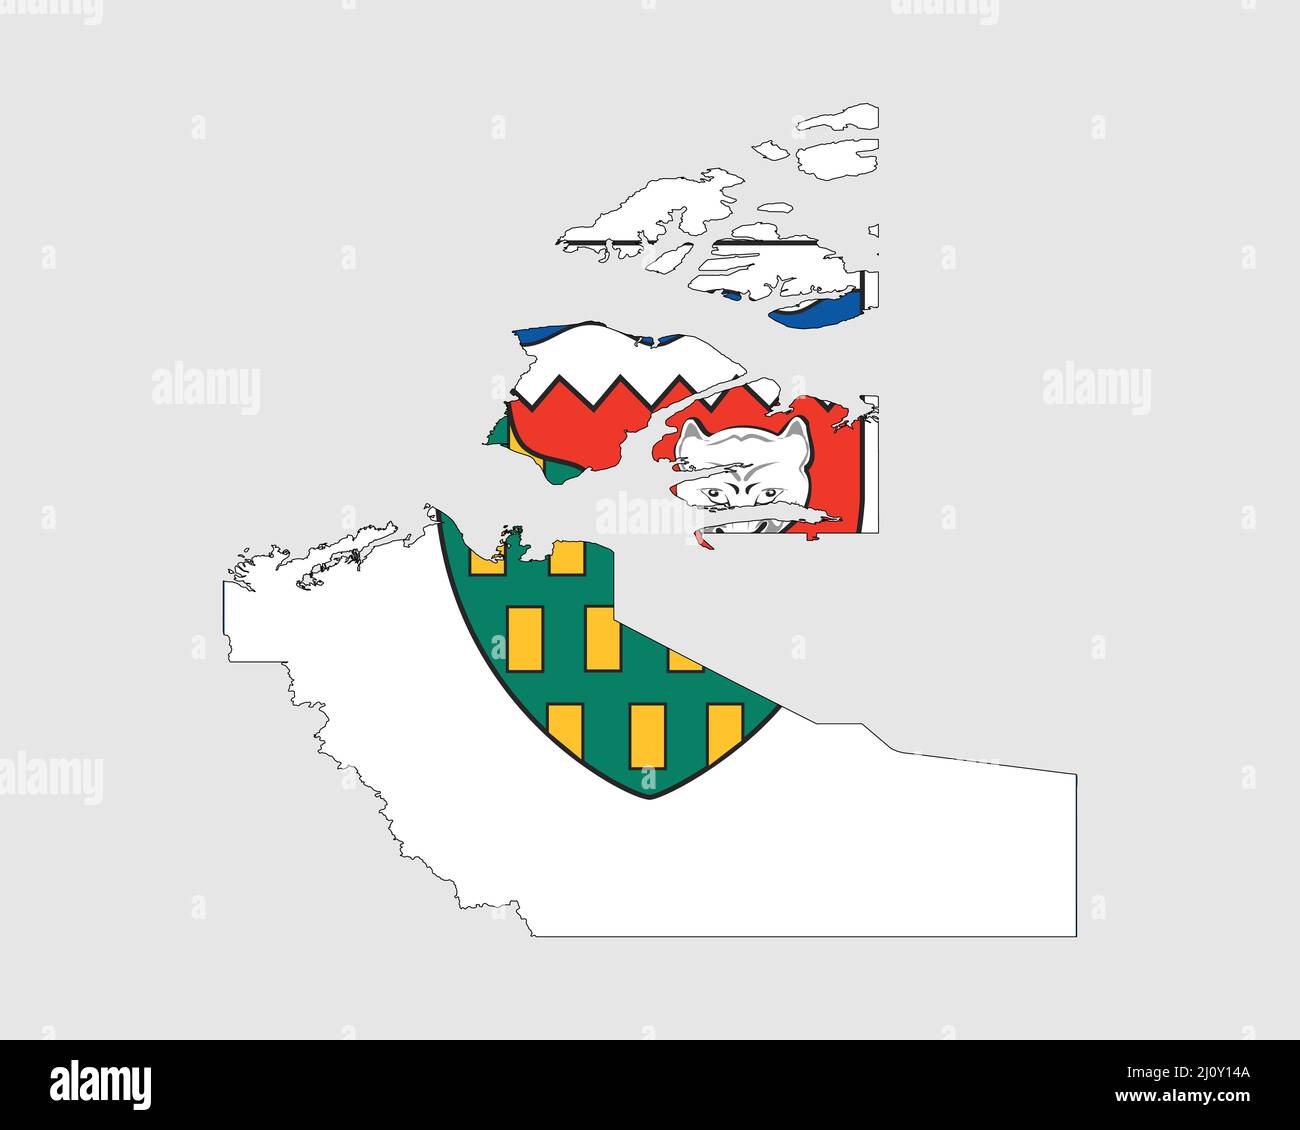 Nordwest-Territorien Karte Flagge. Karte von NT, Kanada mit Flagge. Kanadisches Bundesgebiet. Vektorgrafik Banner. Stock Vektor